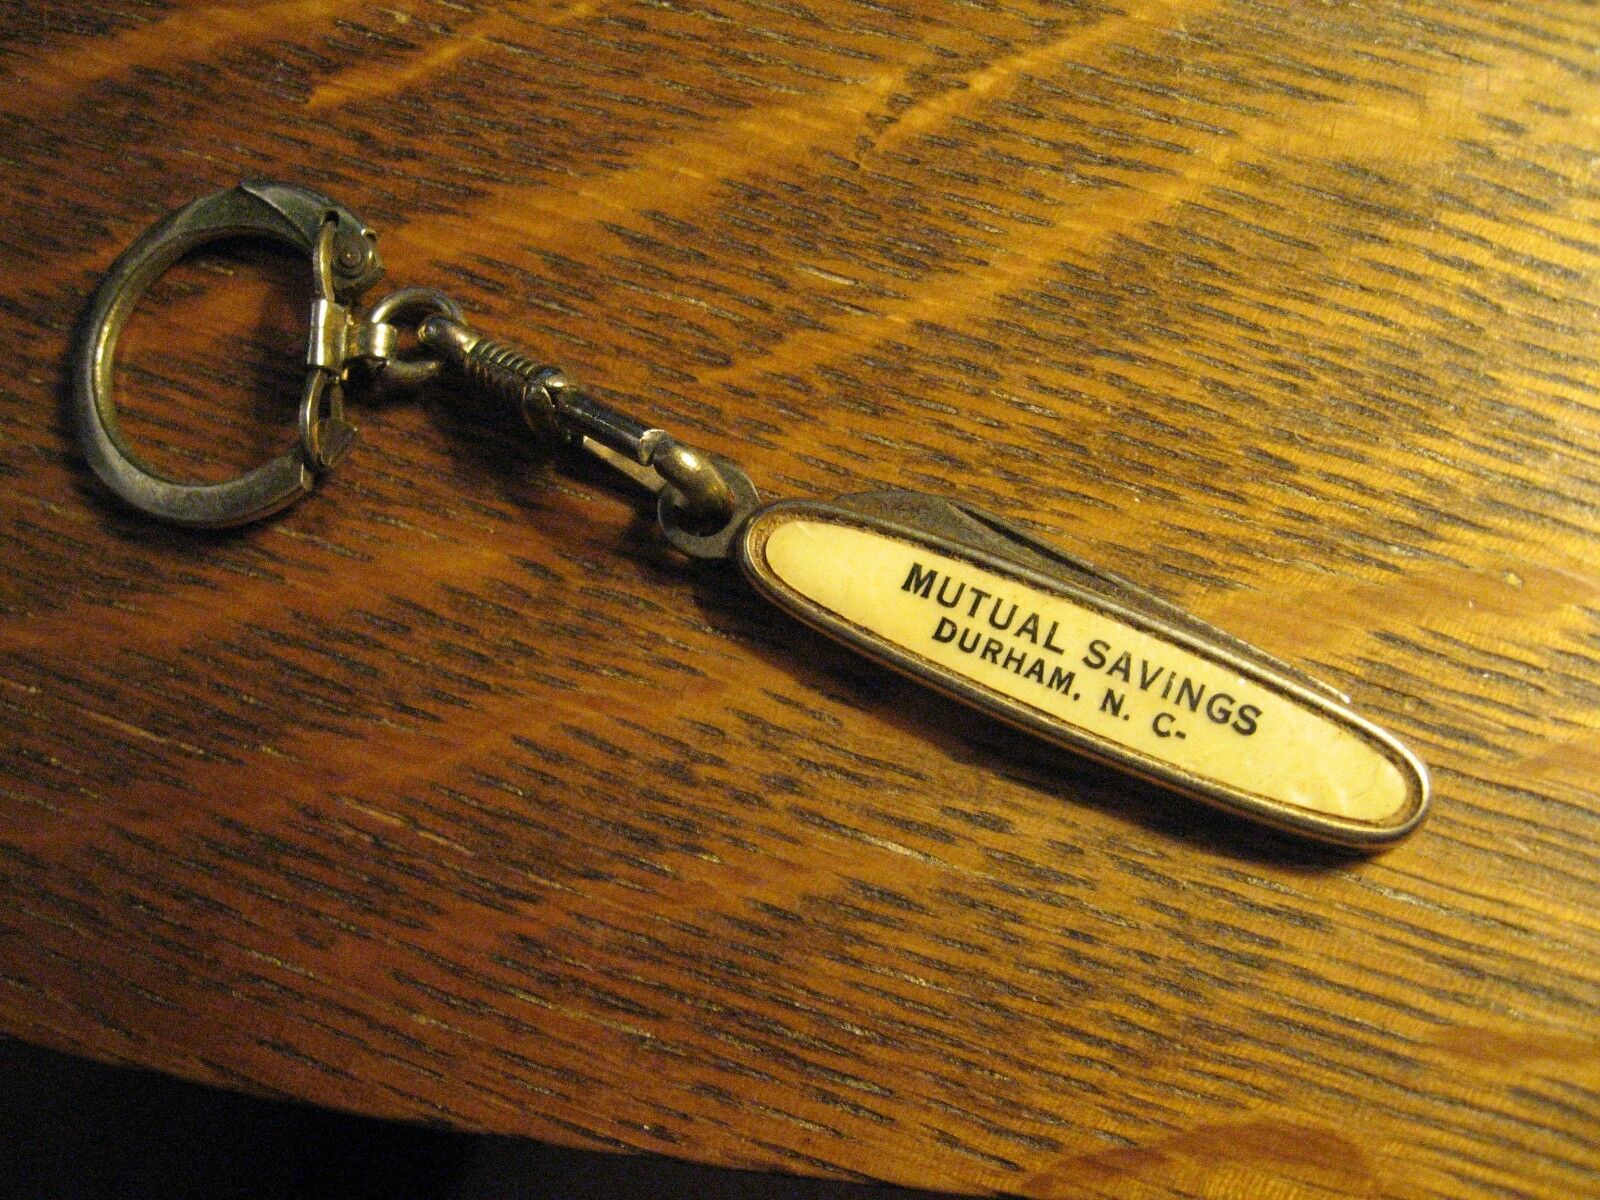 Mutual Savings Bank Durham North Carolina Vintage 1950's Pocket Knife Keychain